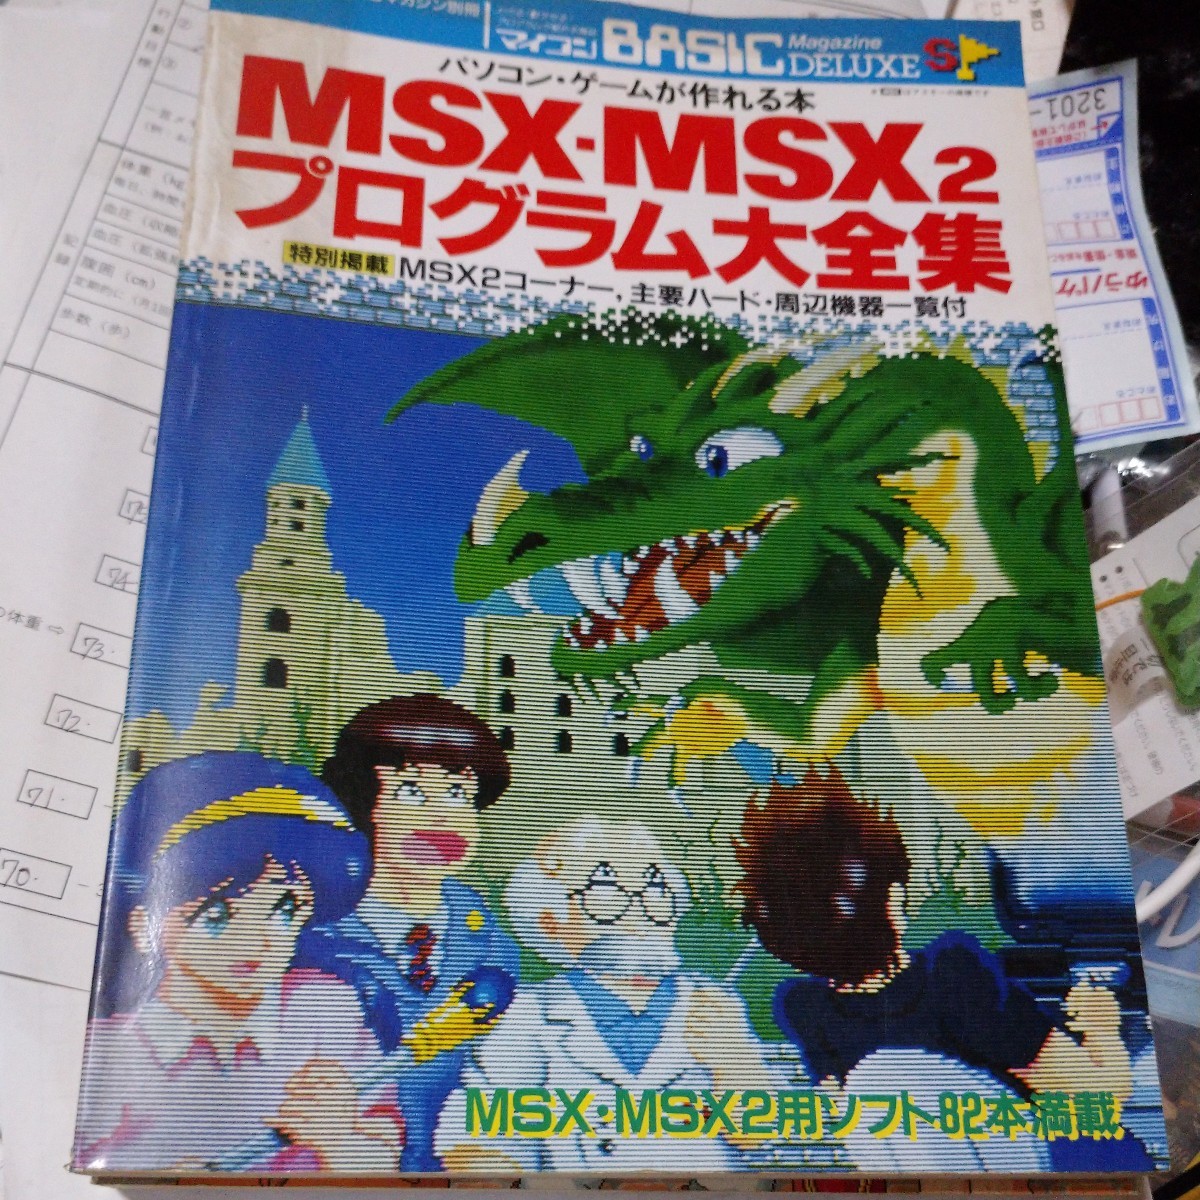 MSX・MSX2プログラム大全集。パソコン・ゲームが作れる本。マイコンBASICマガジン別冊。1987年7月20日発行。